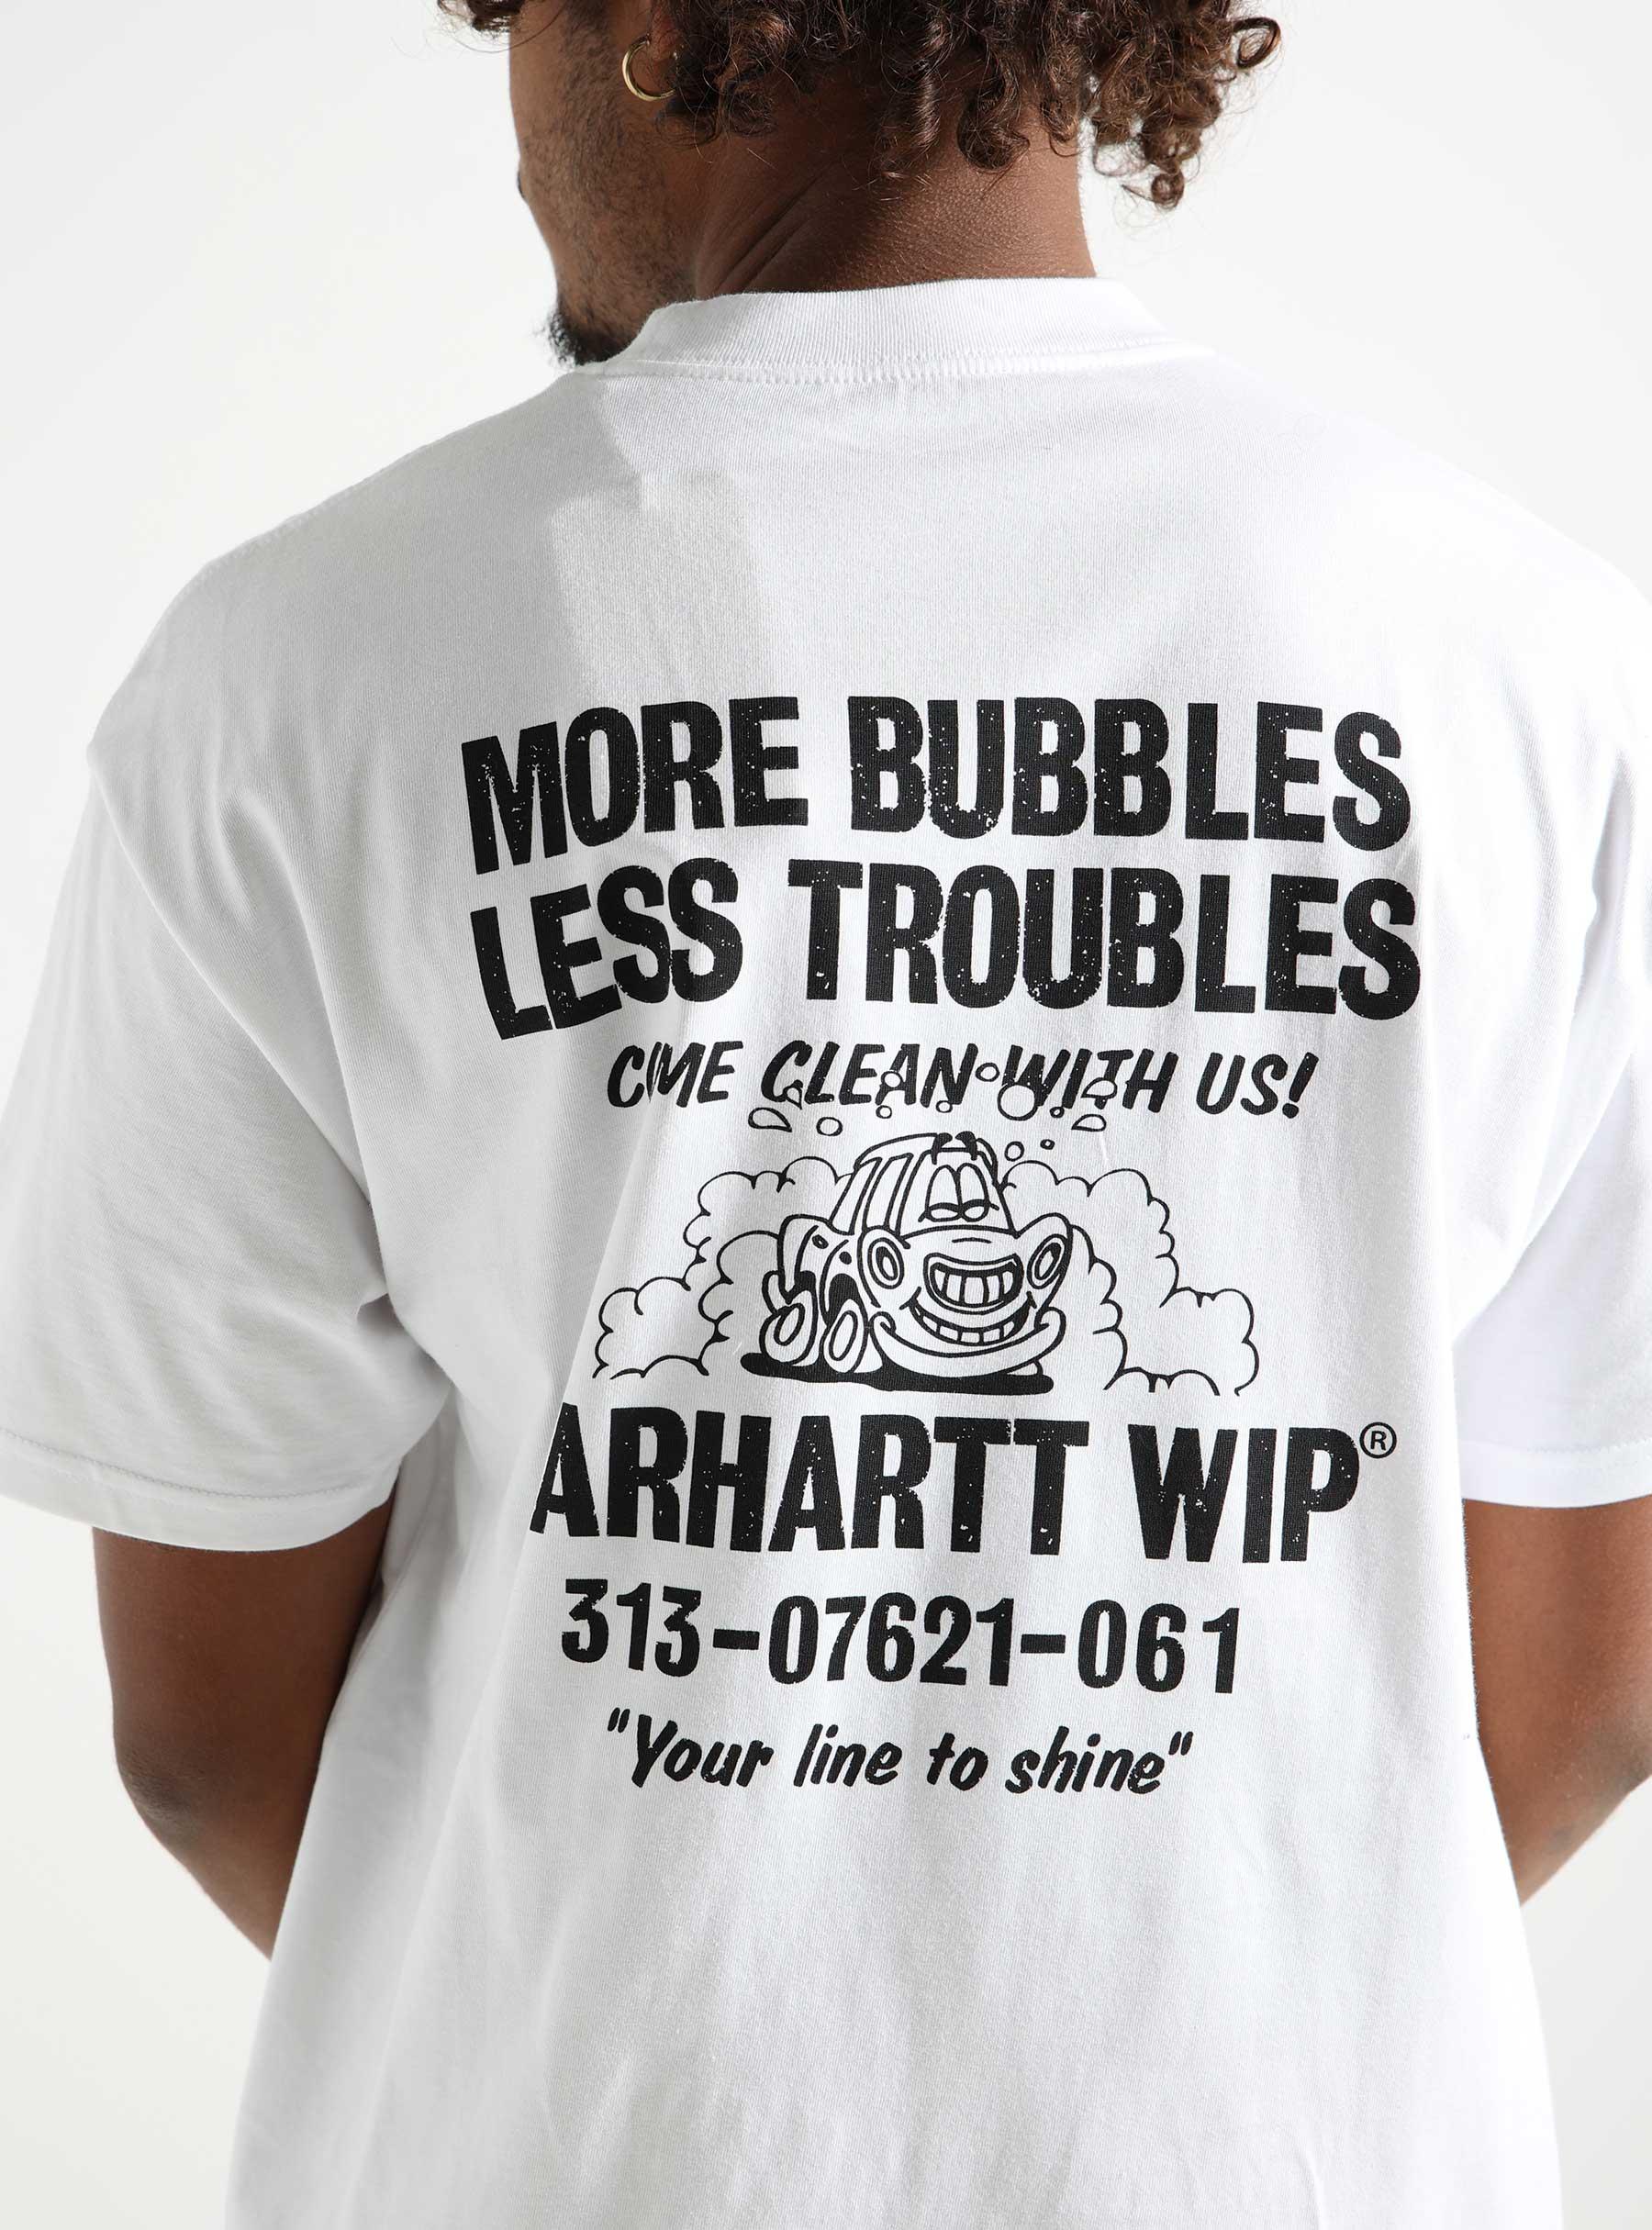 Less Troubles T-Shirt White Black I033187-00AXX